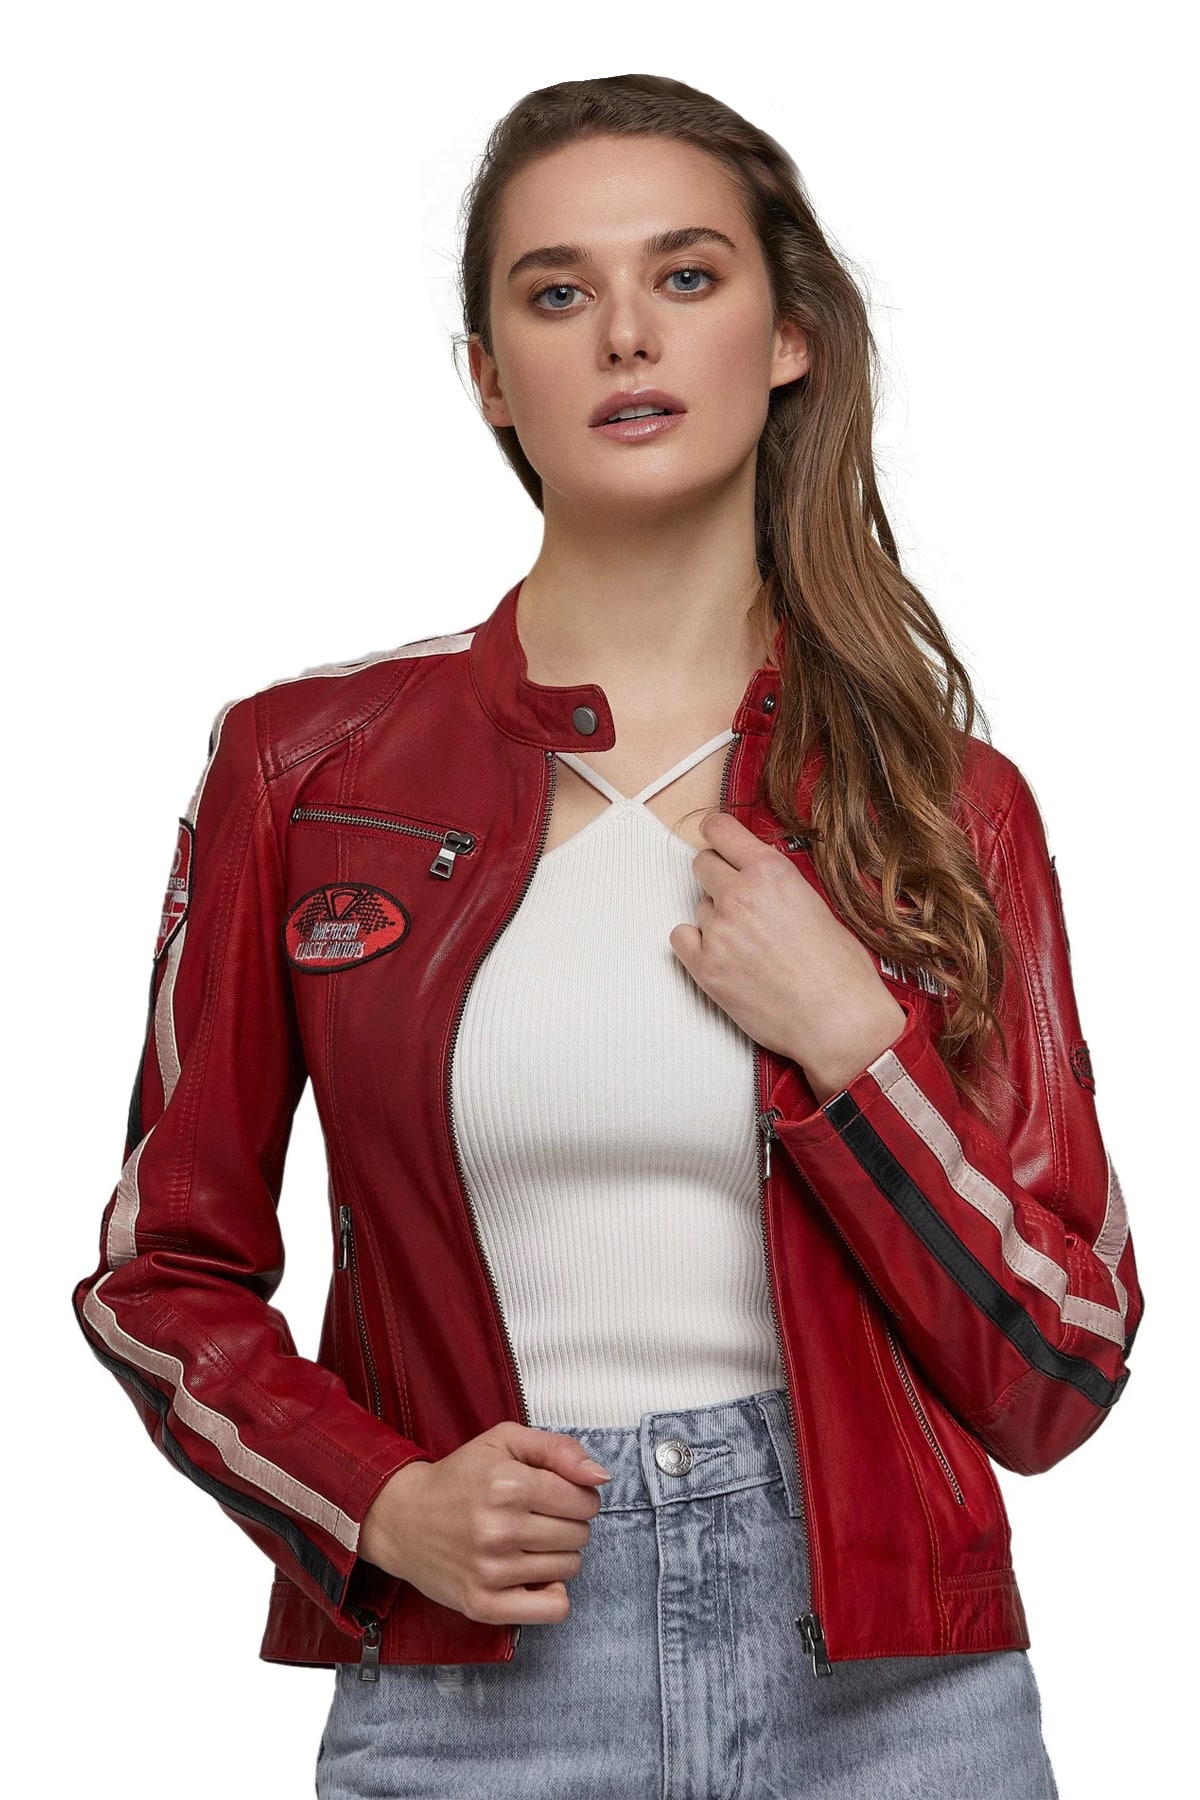 Dark Red Leather Jacket - Blood Red Ladies Fashion Jacket